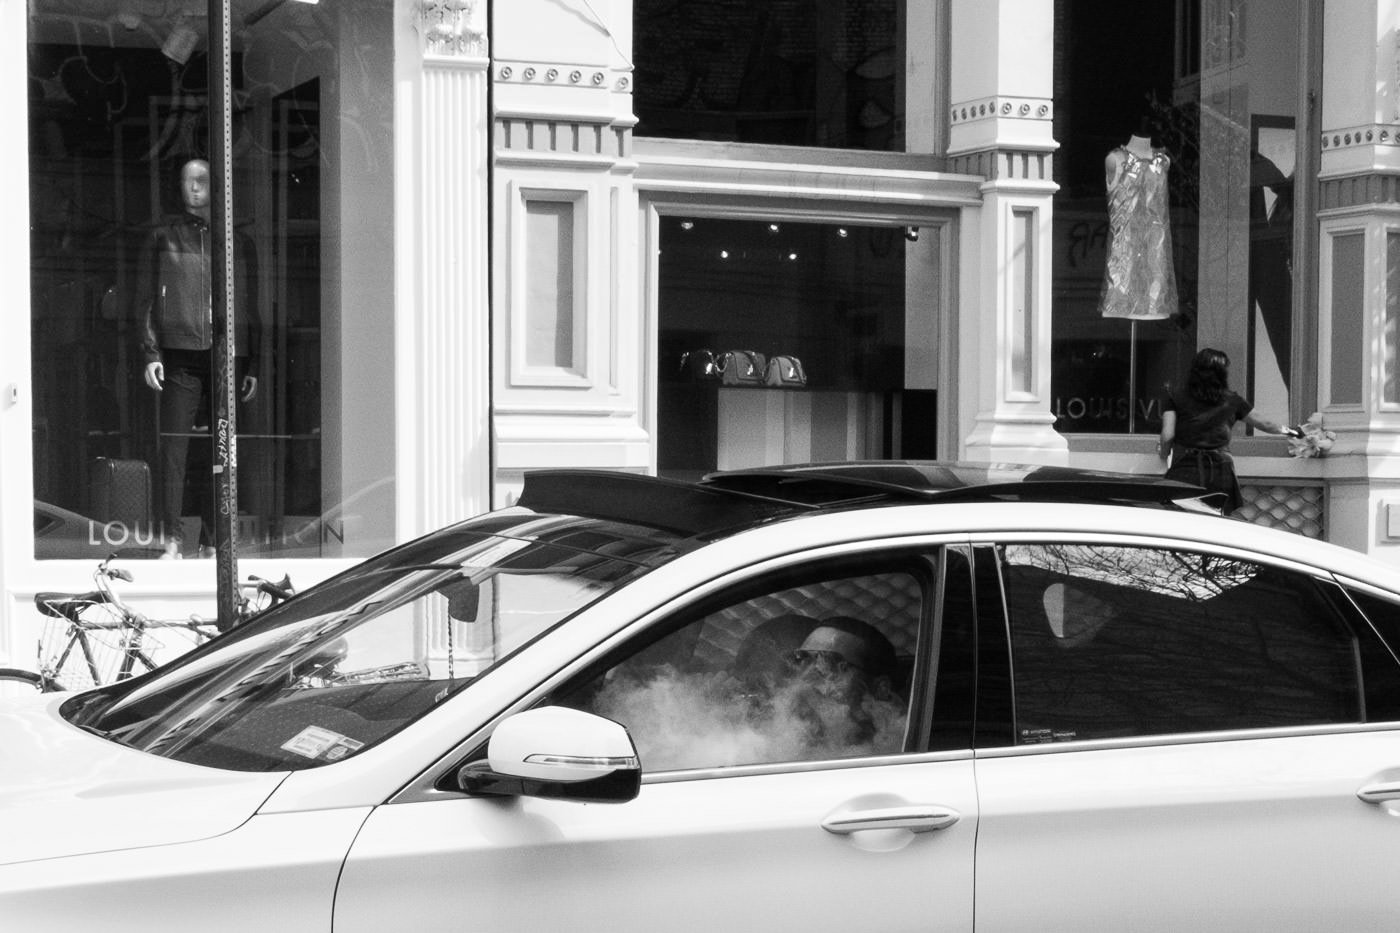 Street photography: Man smoking inside car on the street